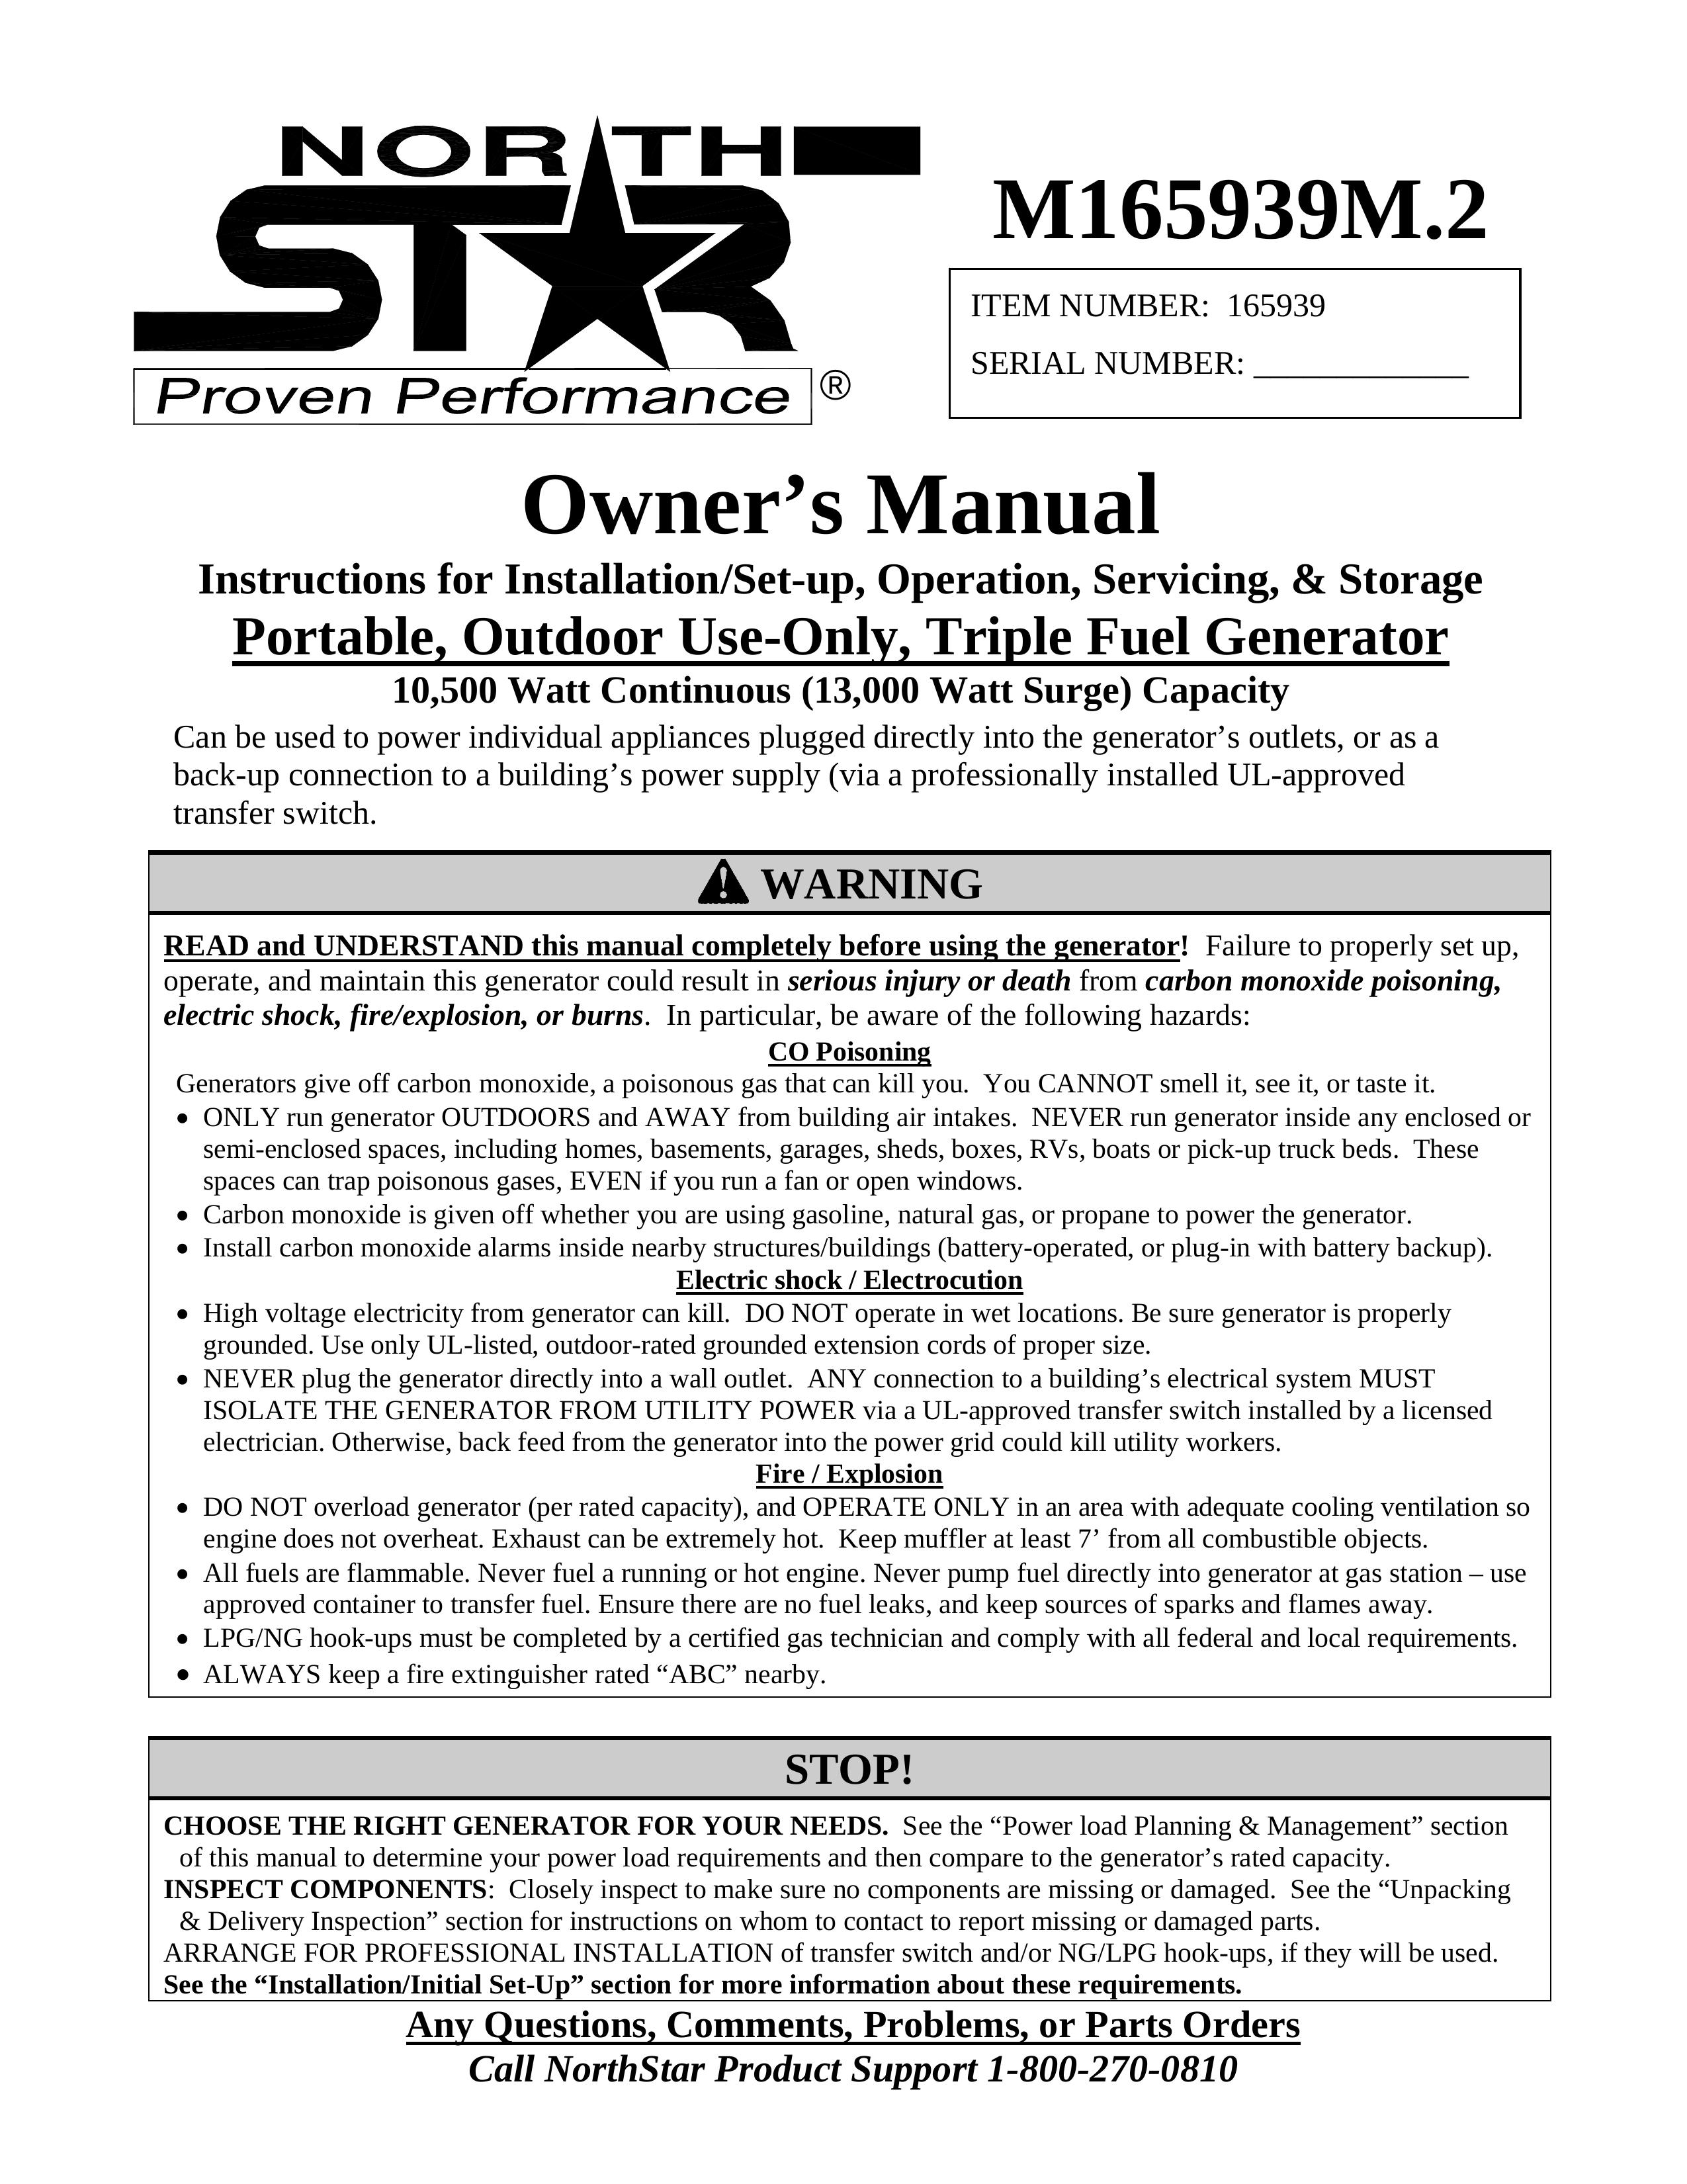 North Star M165939M.2 Portable Generator User Manual